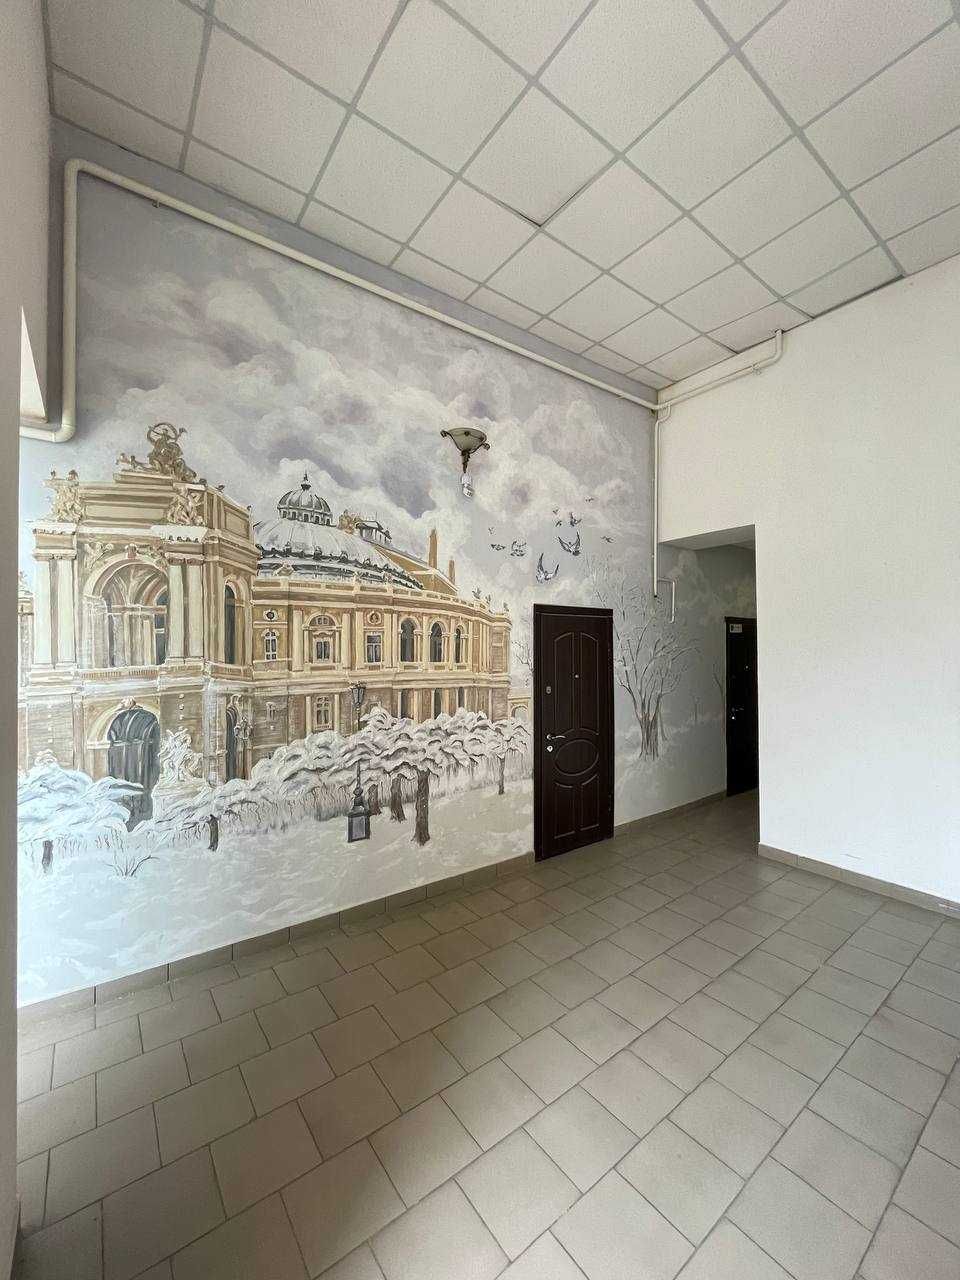 Квартира на ул.Гоголя -памятник архитектуры